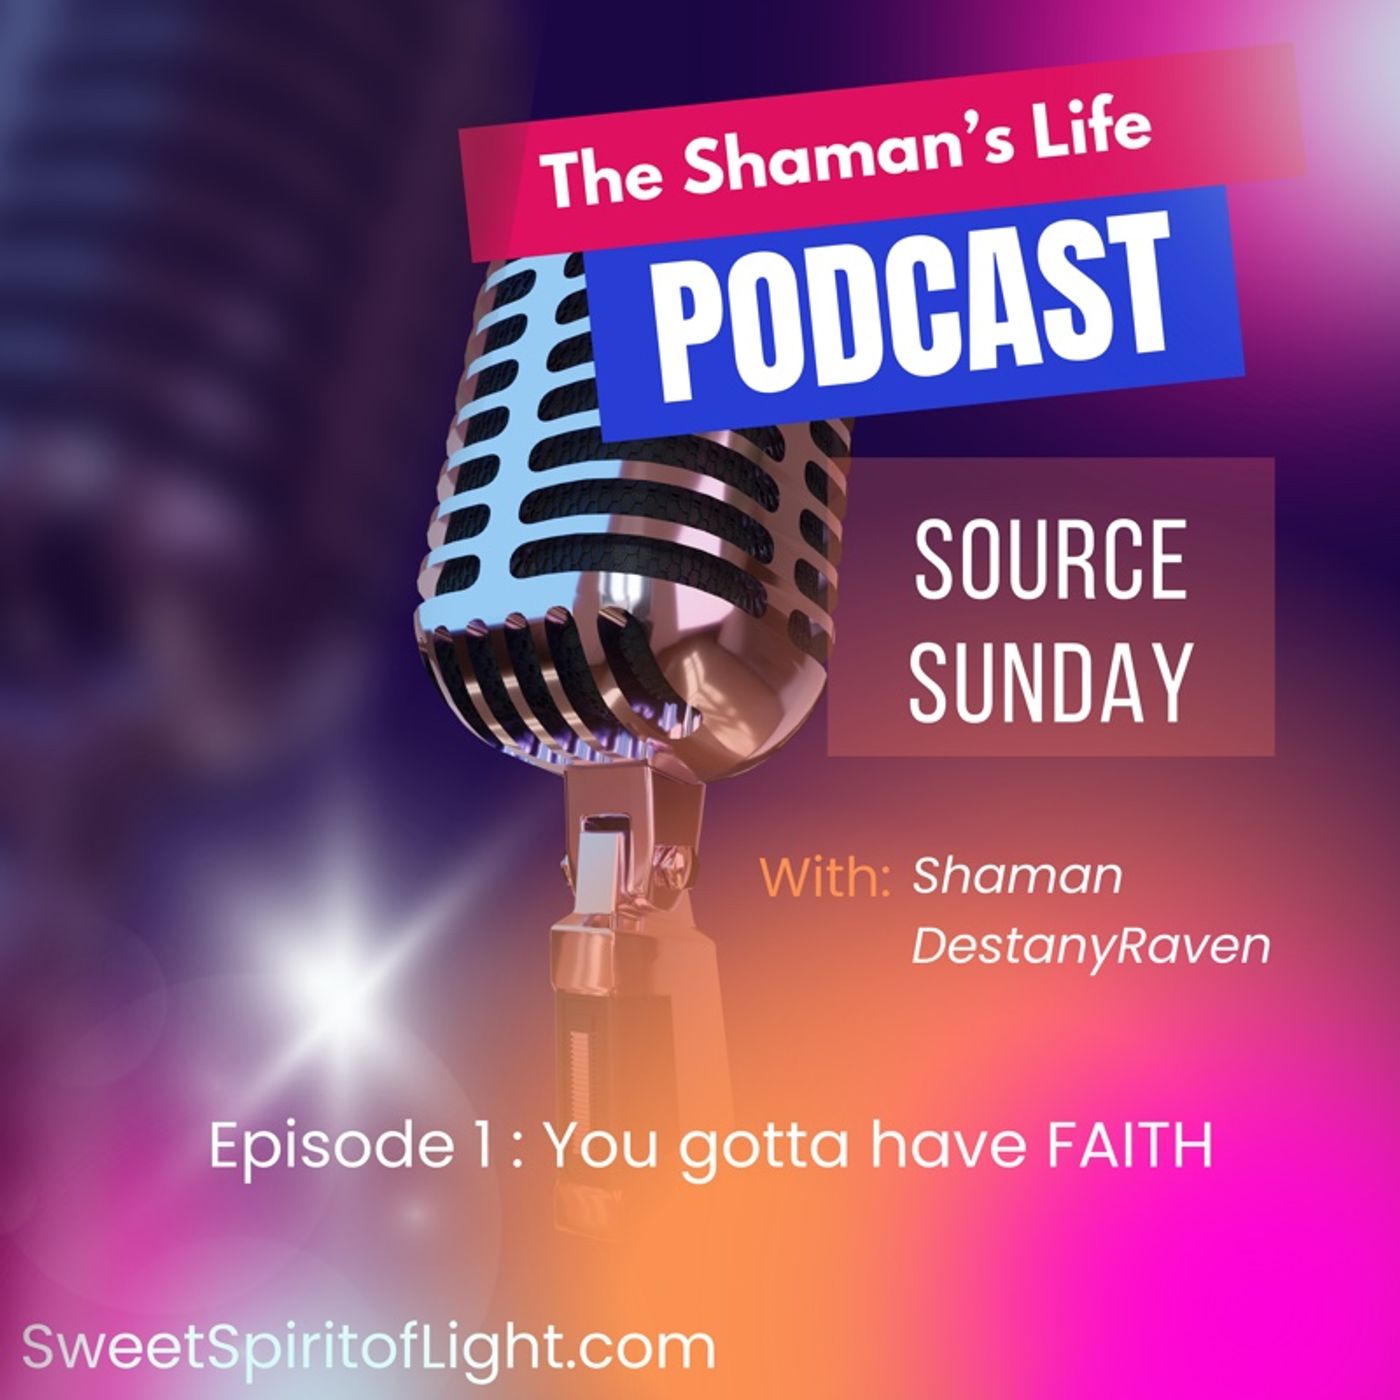 The Shaman’s Life - SOURCE SUNDAY : Episode 1 - You gotta have FAITH